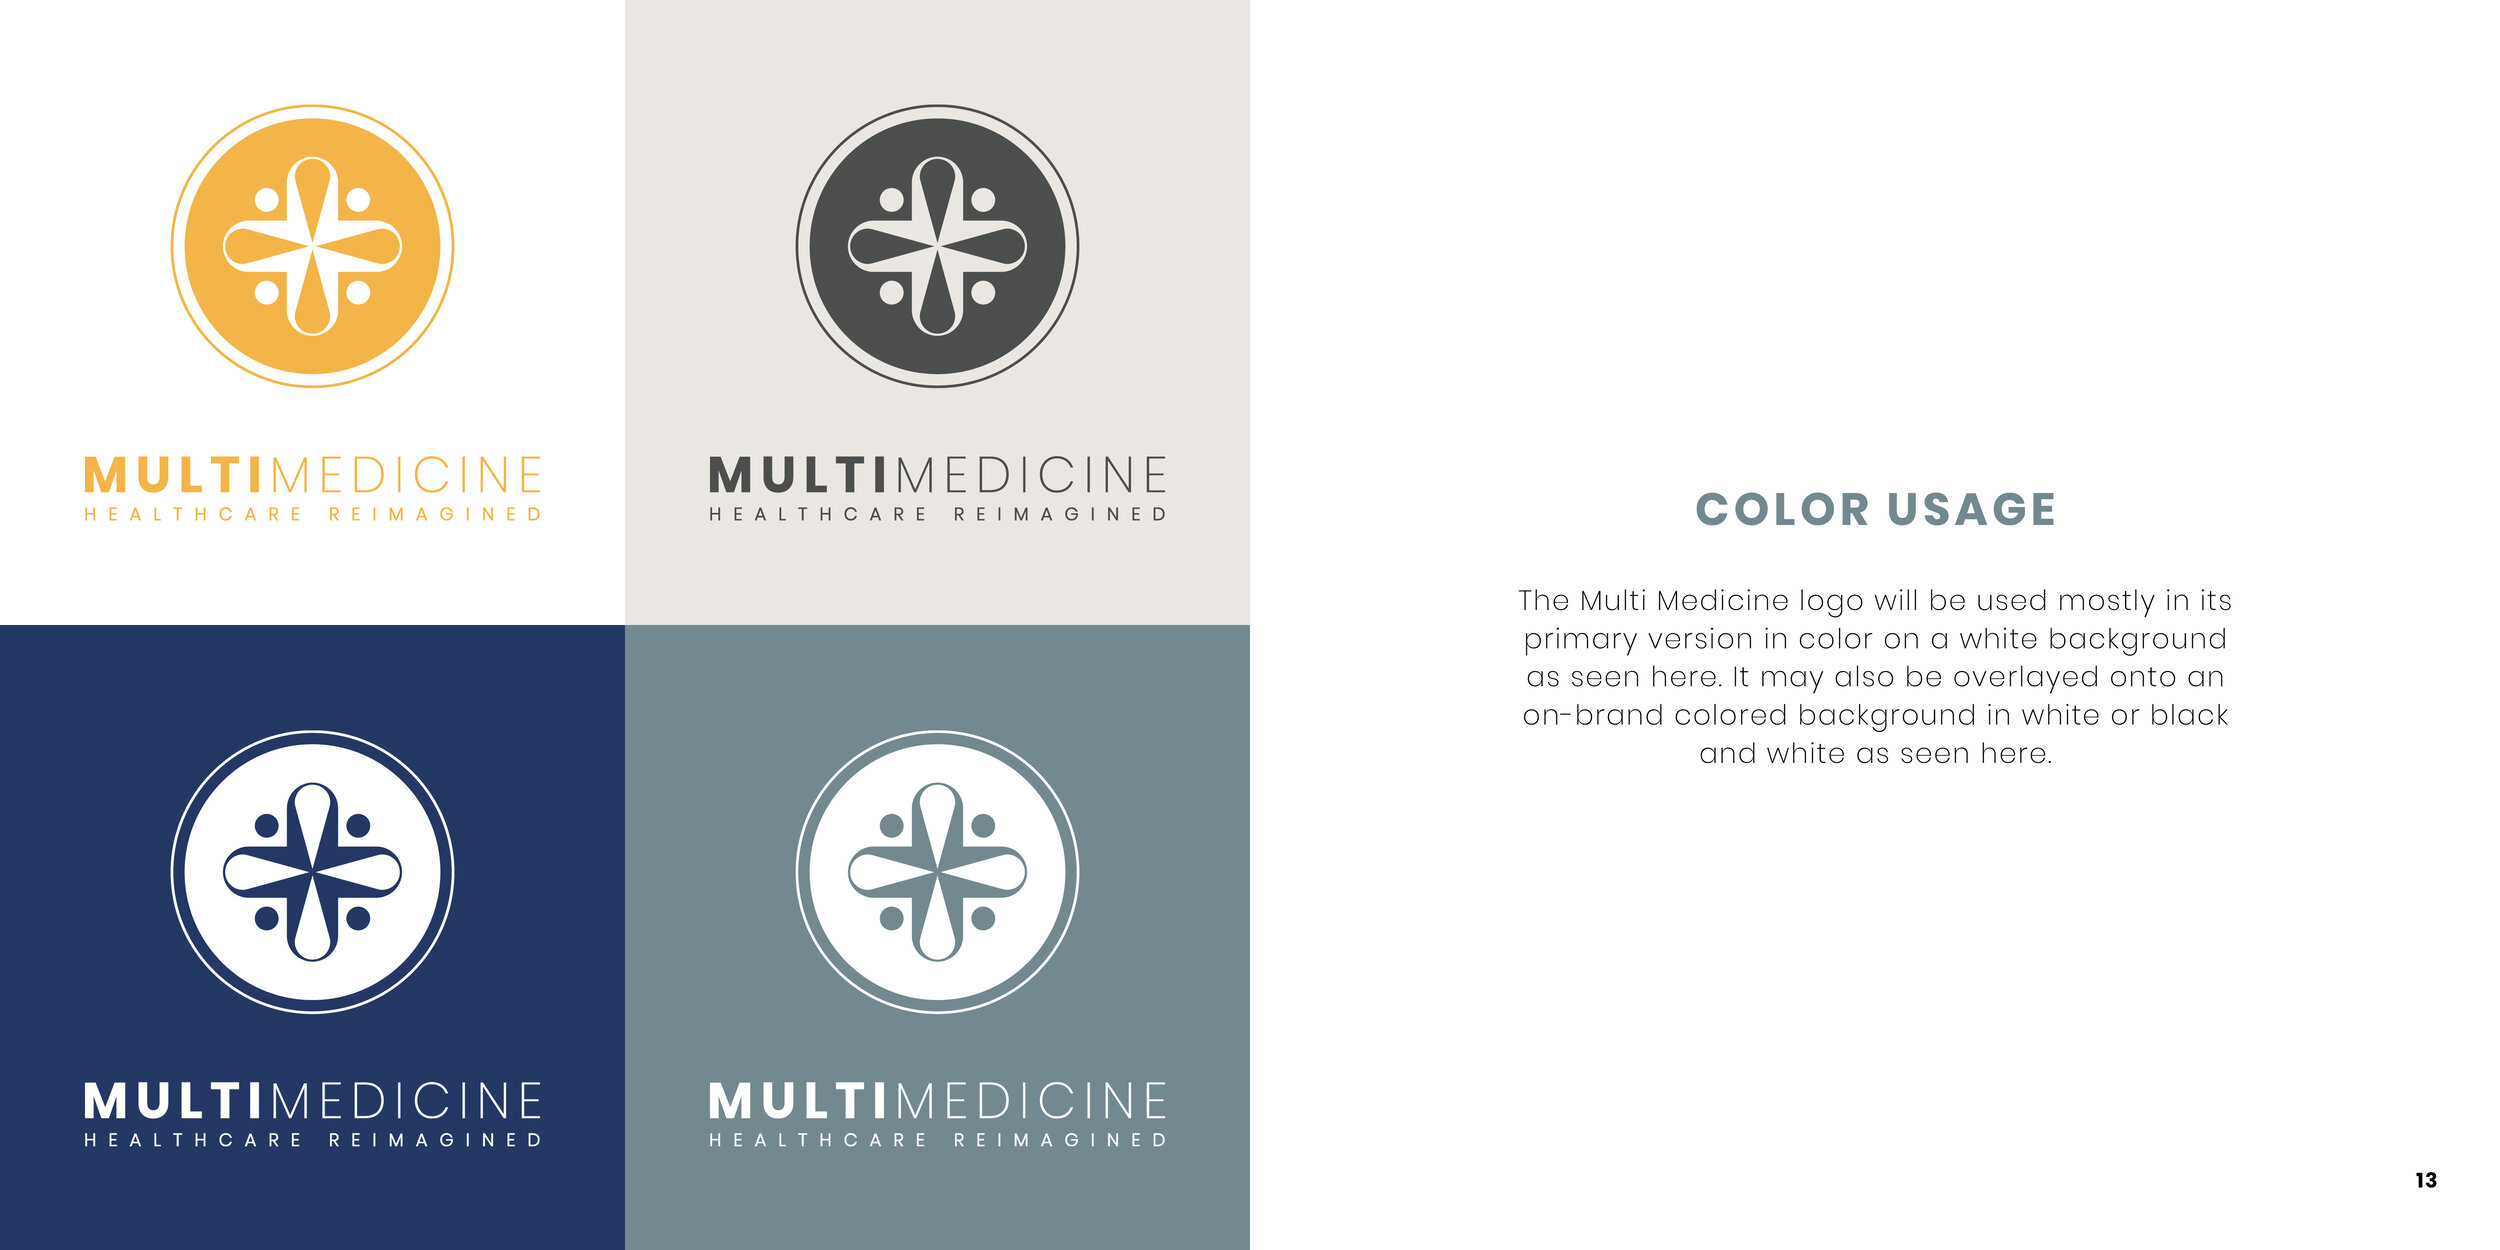 Multi Medicine Brand Style Guide7.jpg